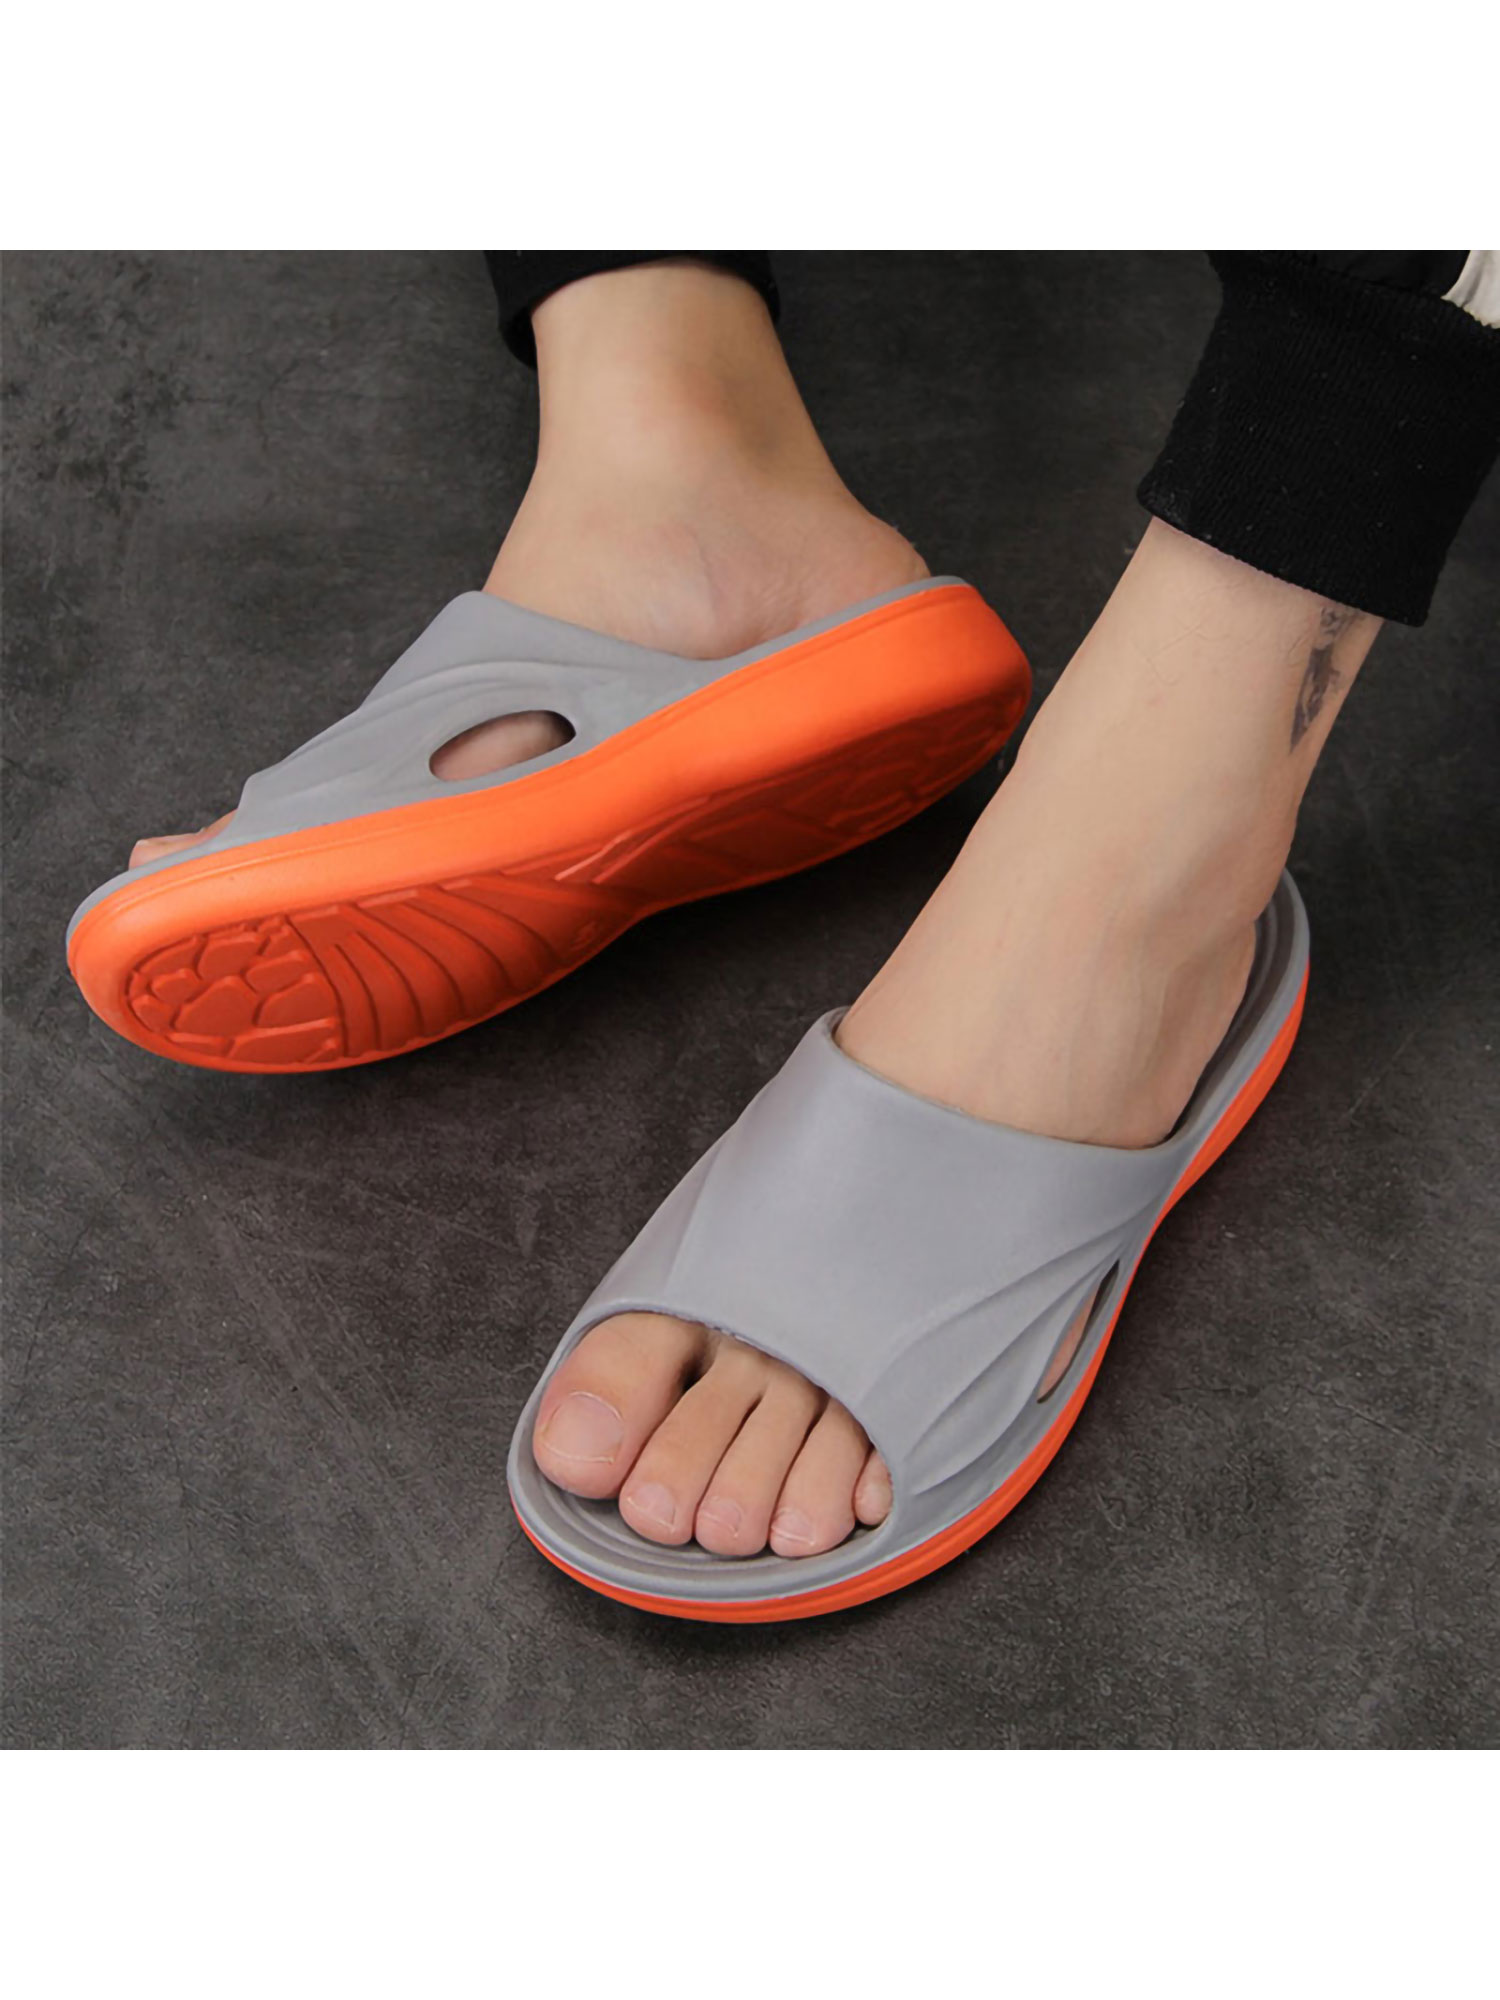 Men's Slip On Sport Slide Sandals Flip Flop Shower Slippers House Shoes U7E7